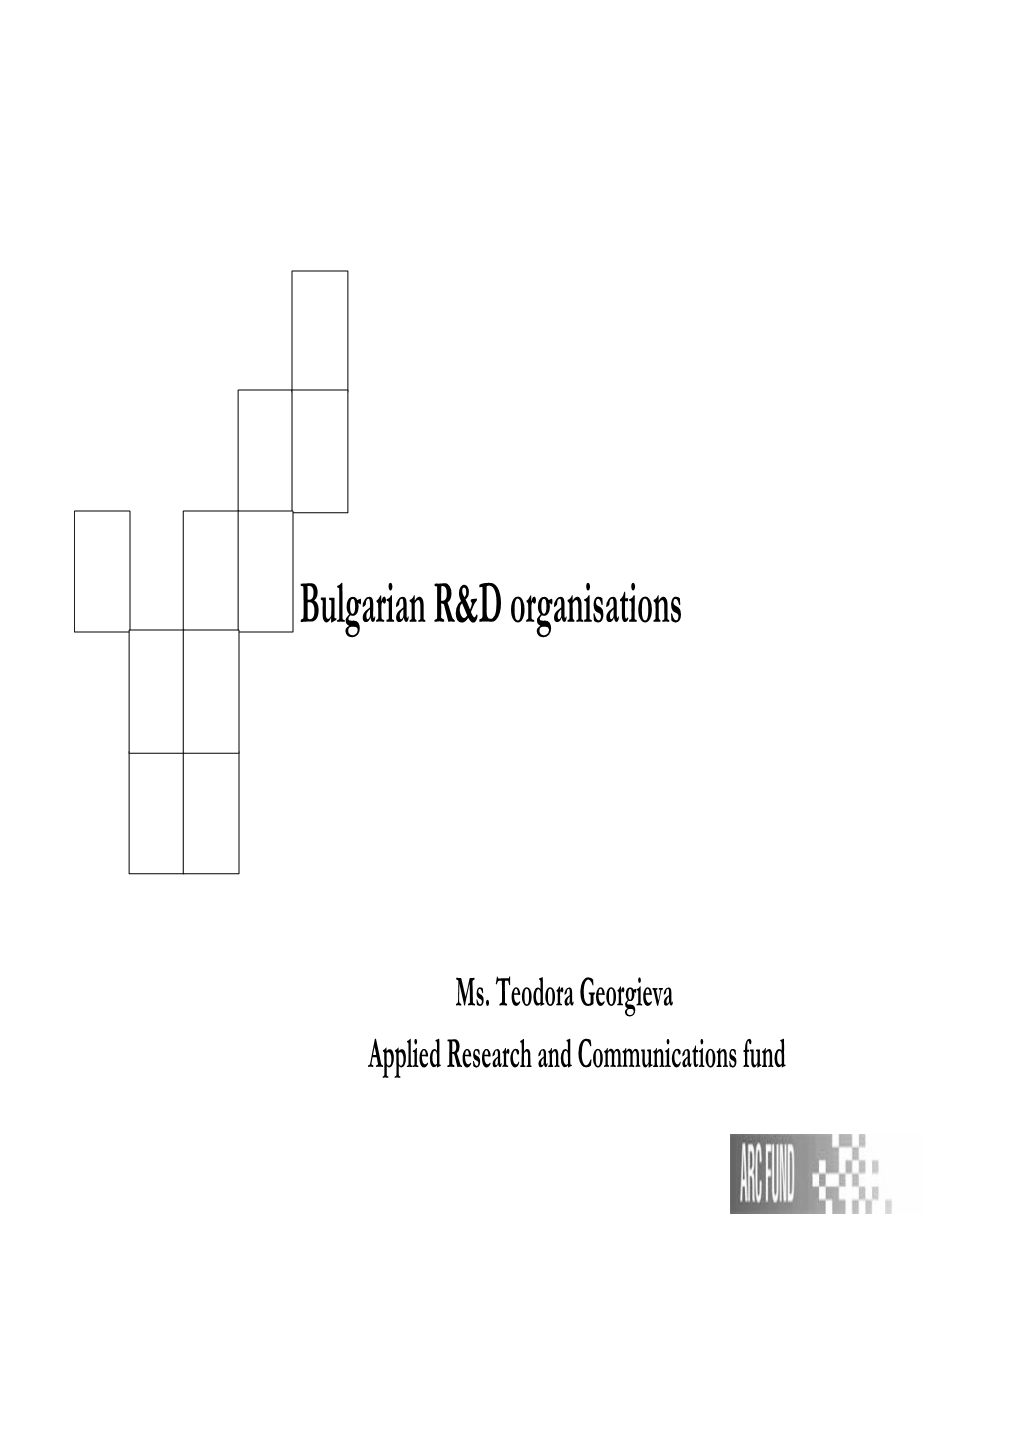 The R&D Status in Bulgaria